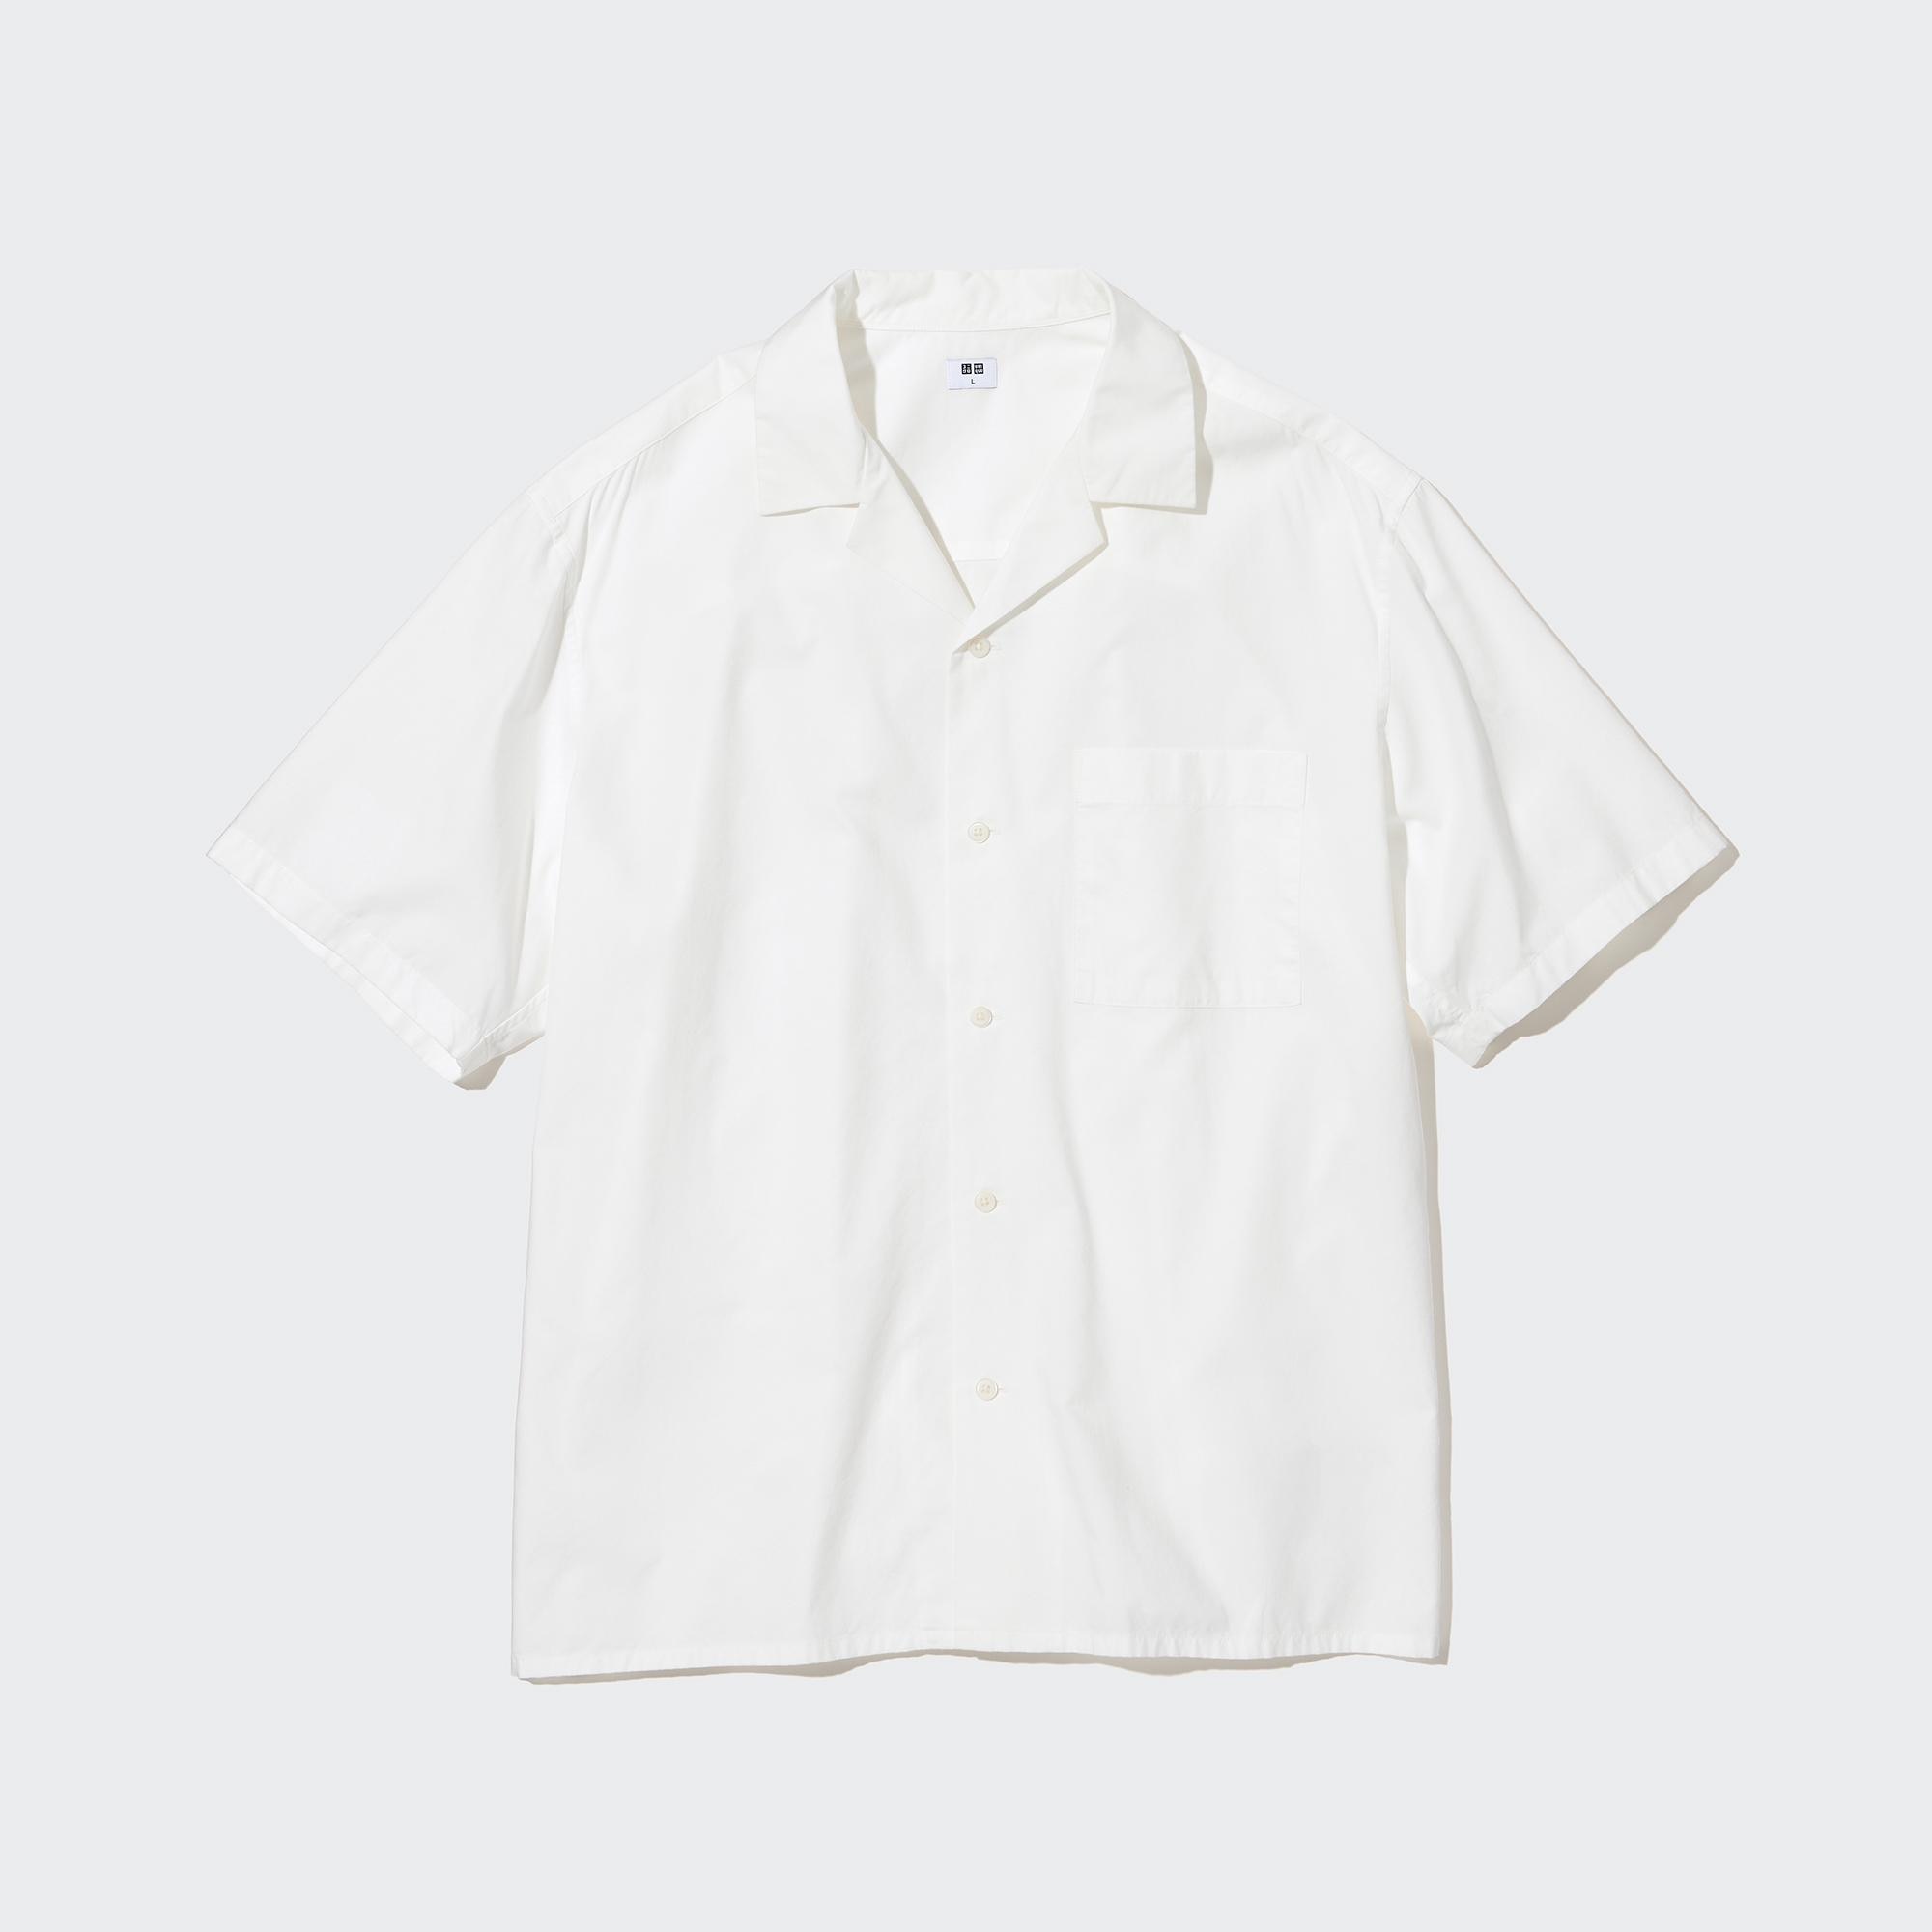 Uniqlo AIRism Full Open Short Sleeve Polo Shirt  White  Online Sneaker  Store